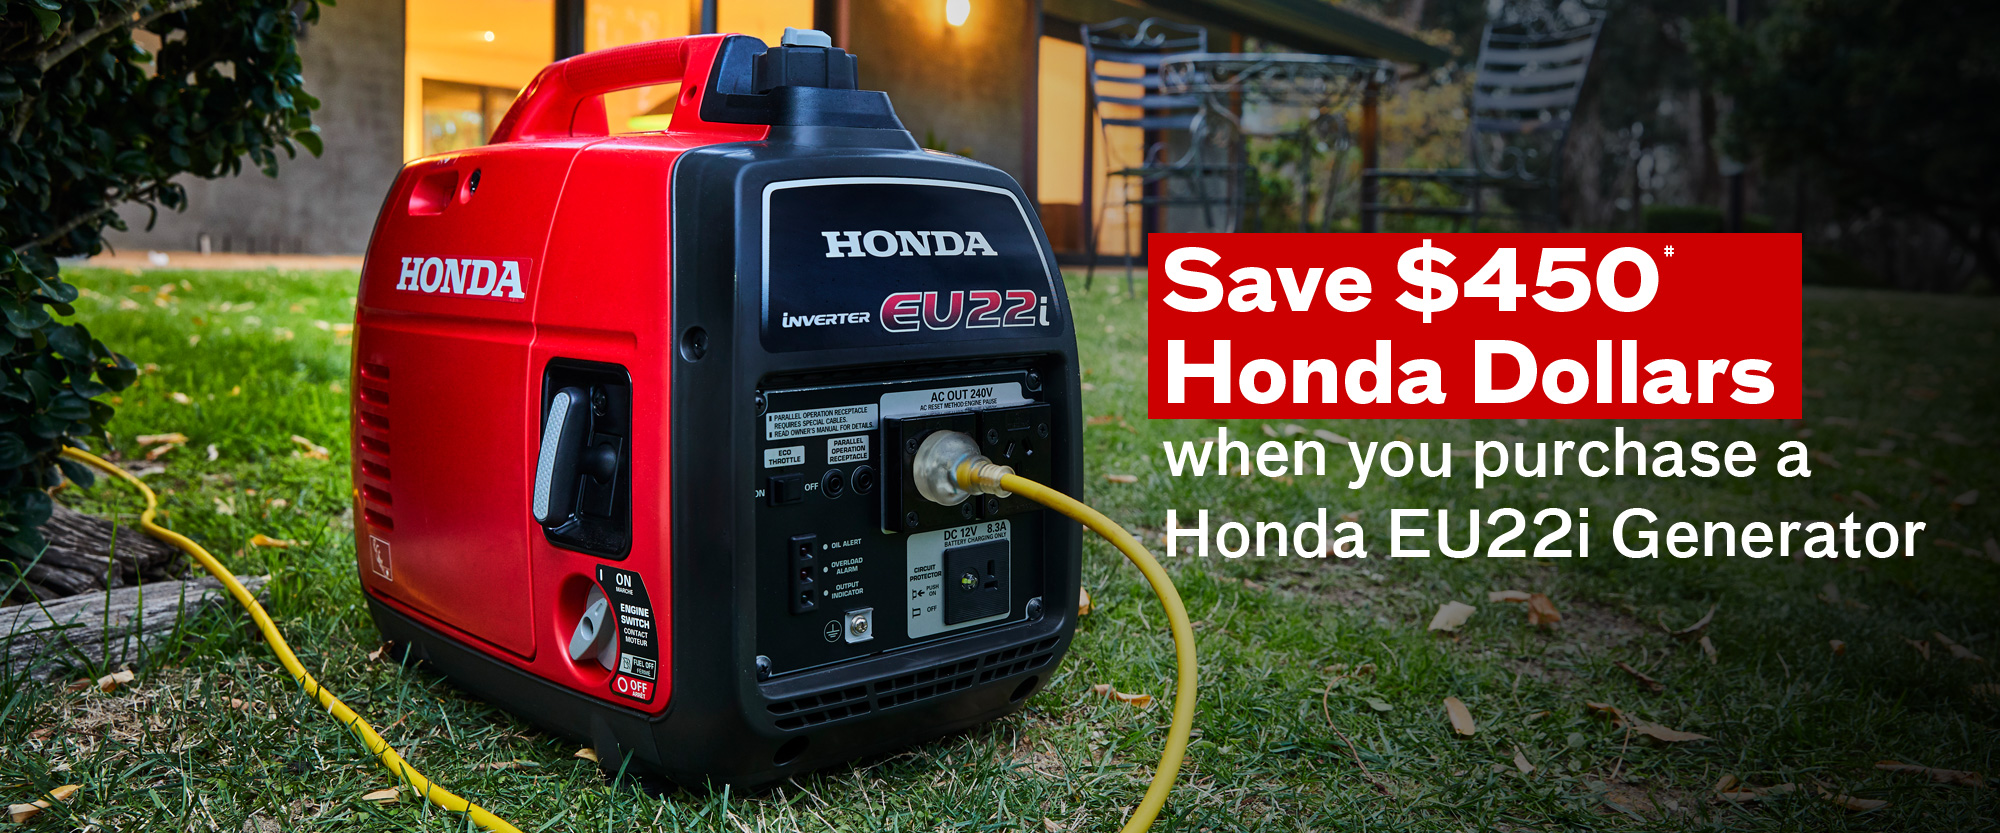 Save $450* Honda Dollars when you purchase a Honda EU22i Generator